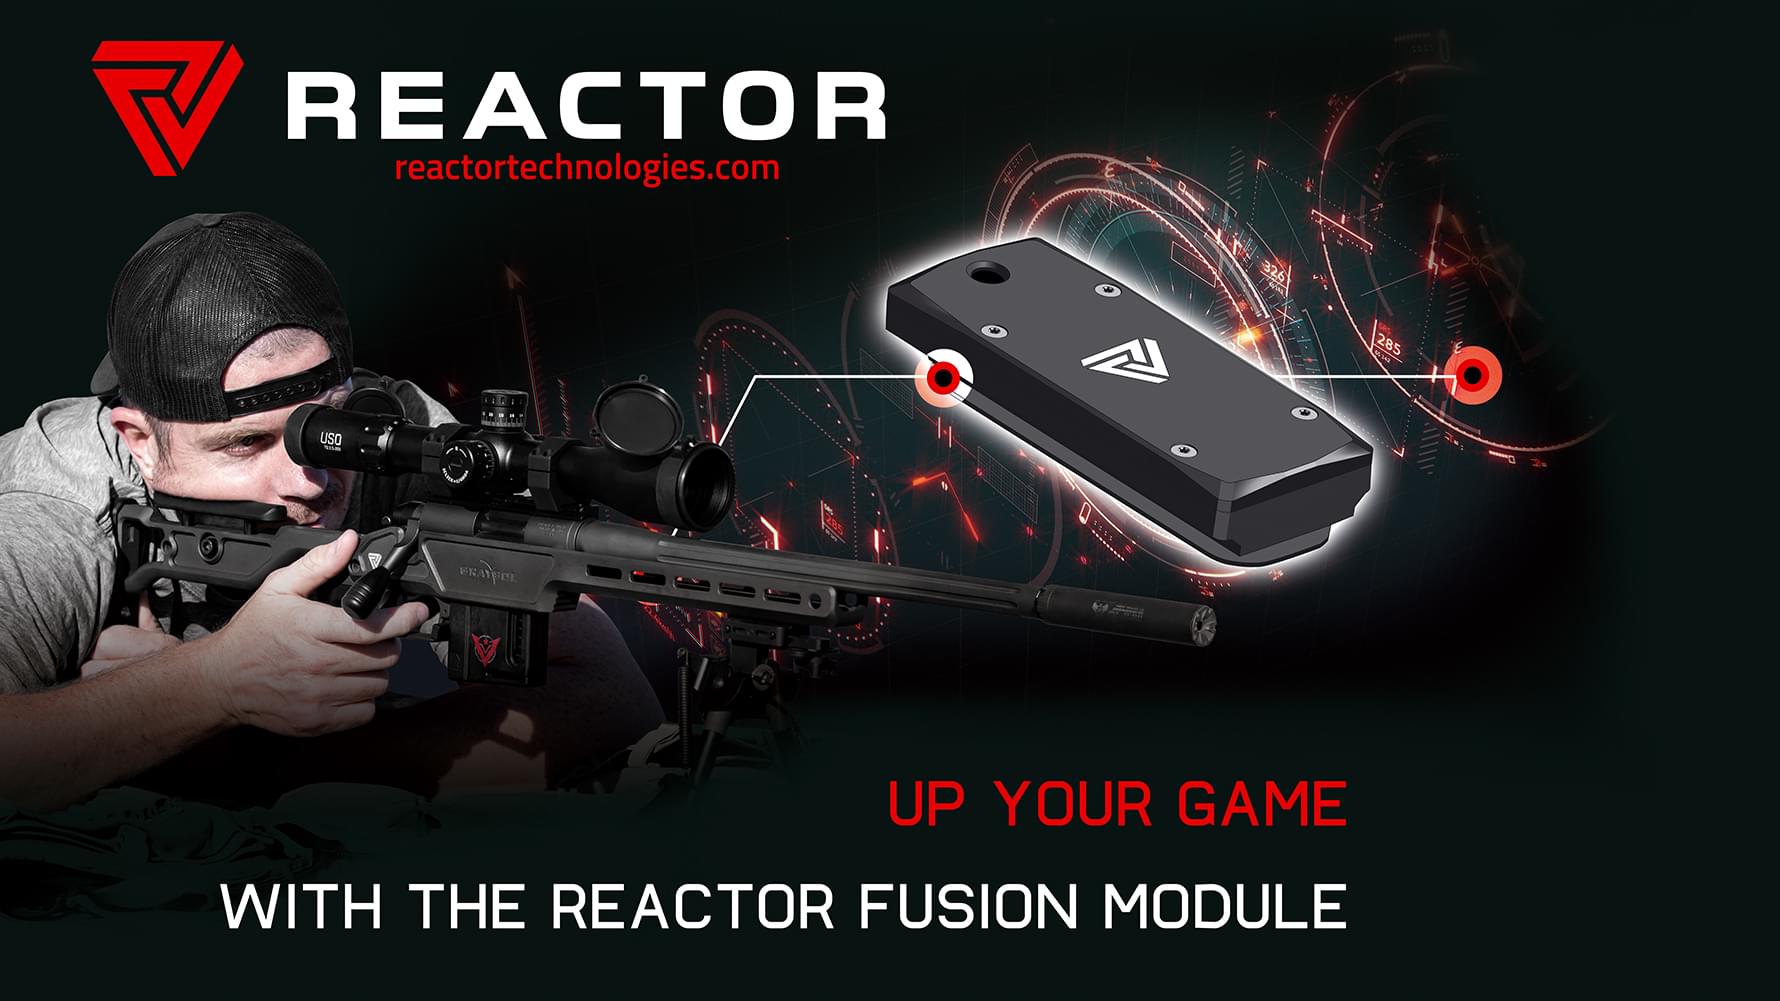 Reactor Digital ADs